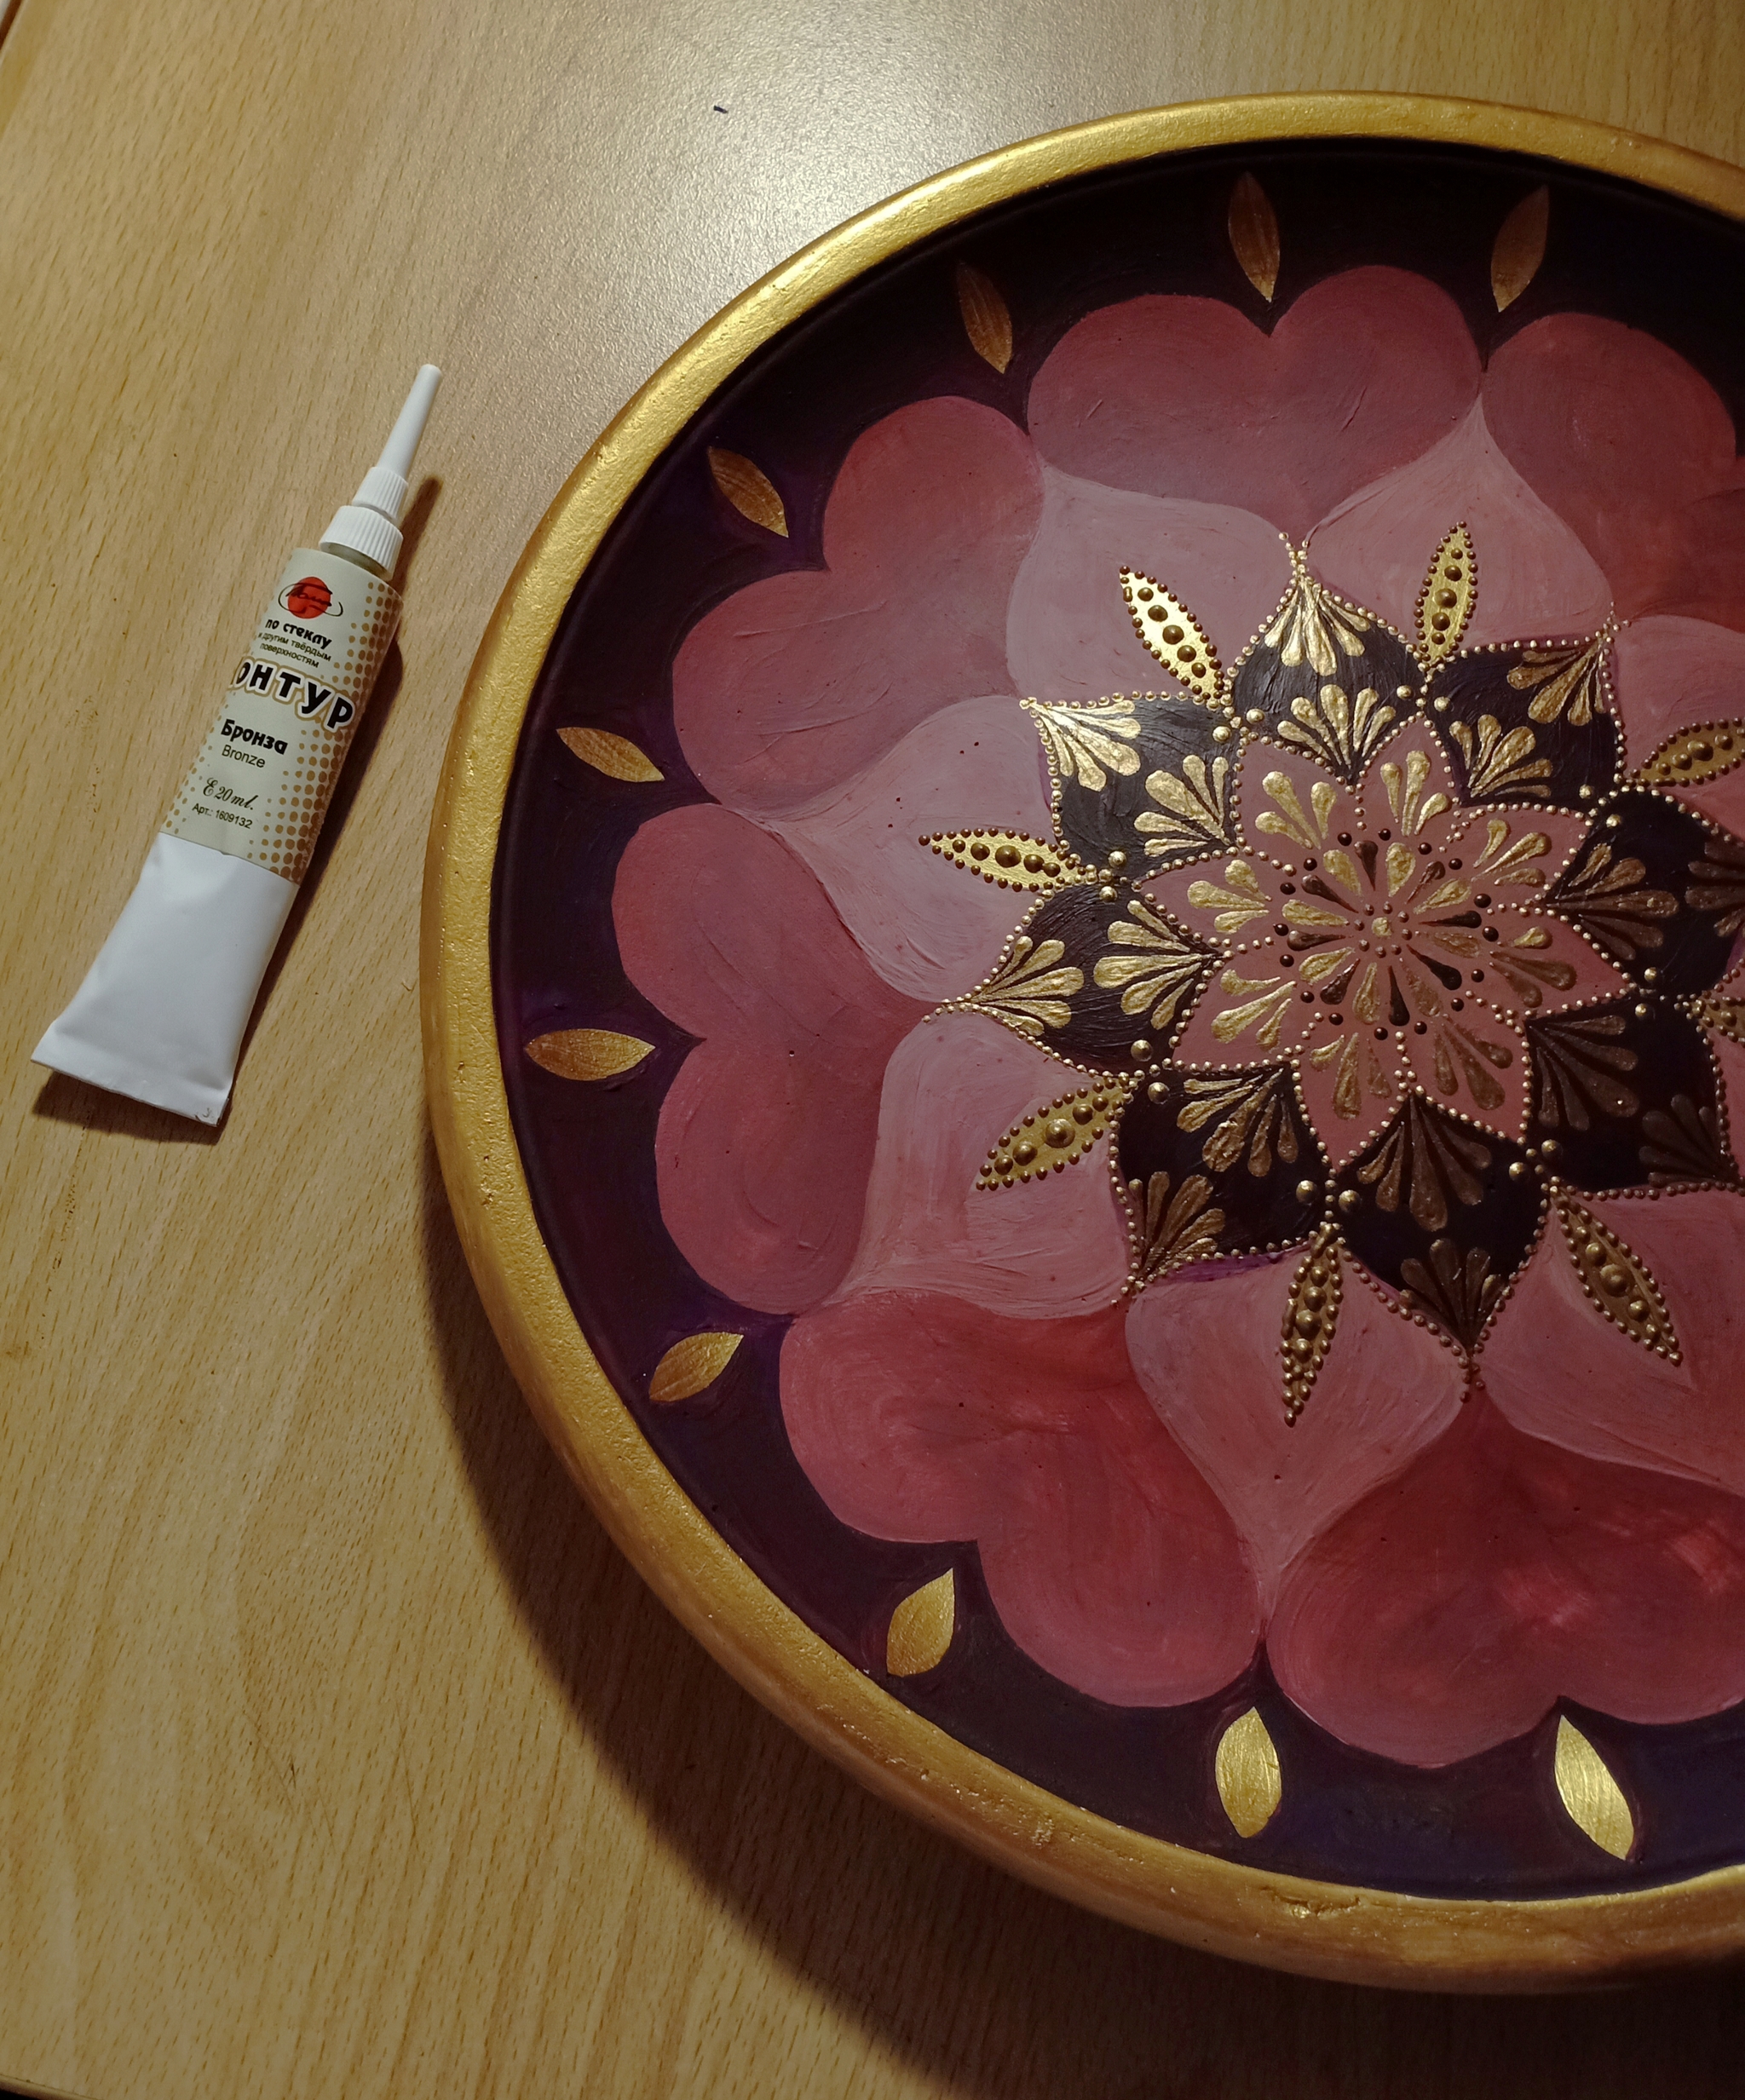 How I painted the plate - My, Painting, Art, Mandala, Plate, Video, Longpost